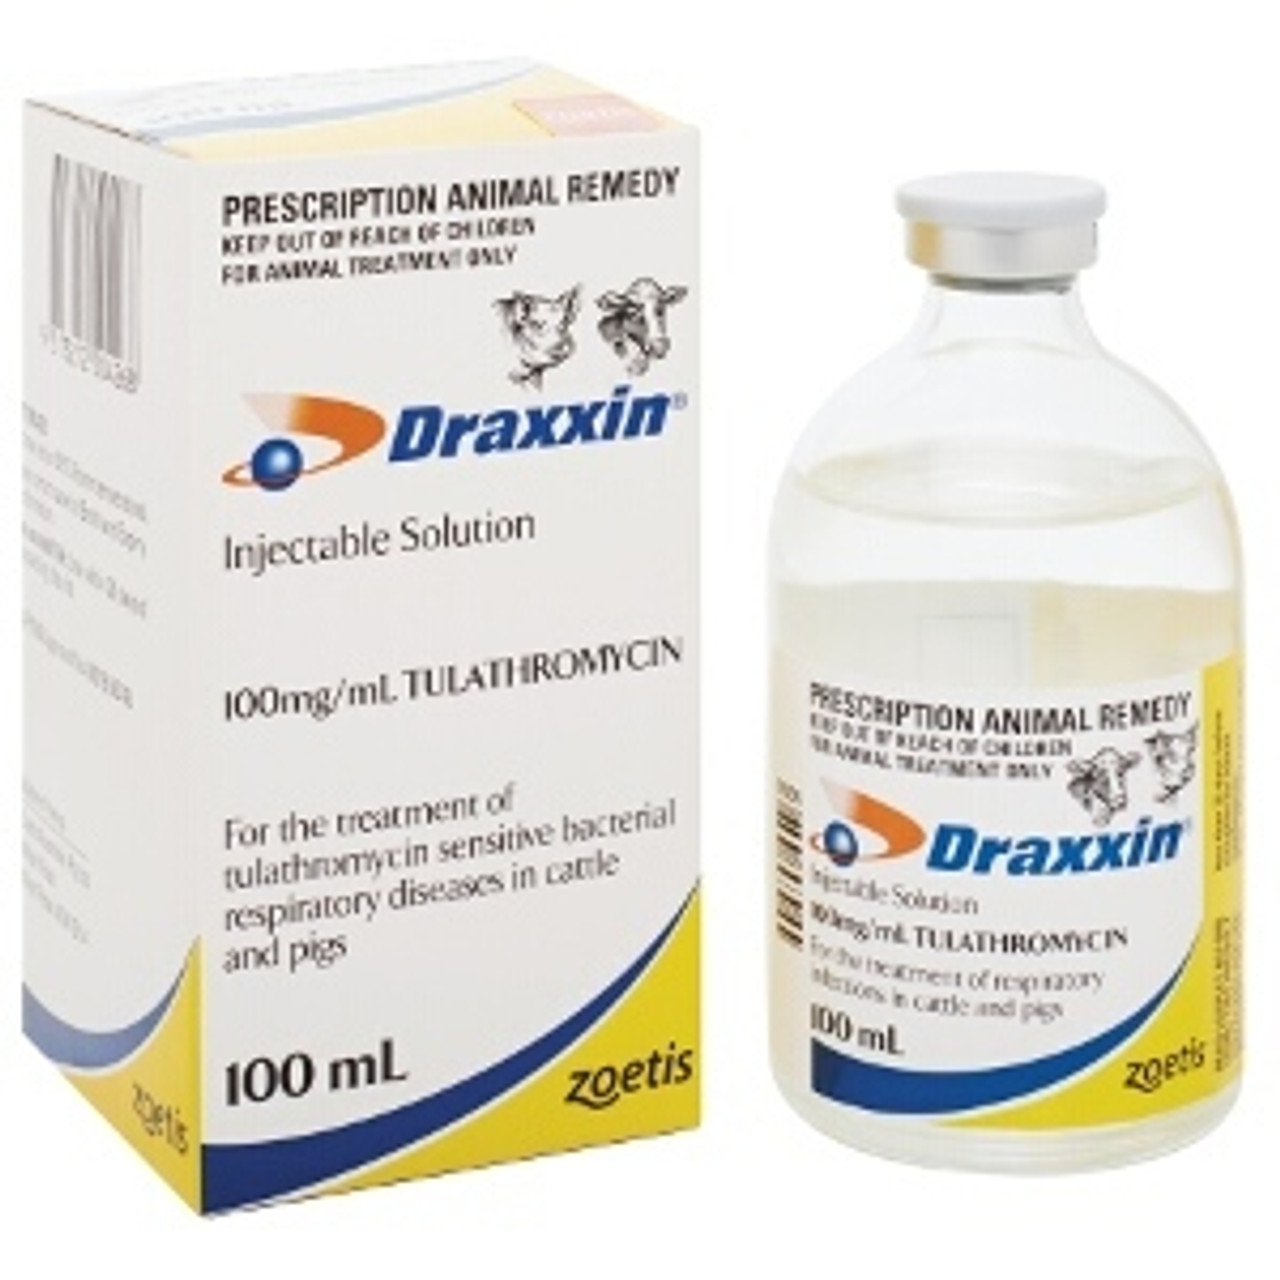 draxxin-100mg-ml-tulathromycin-100ml-injection-pet-care-pharmacy